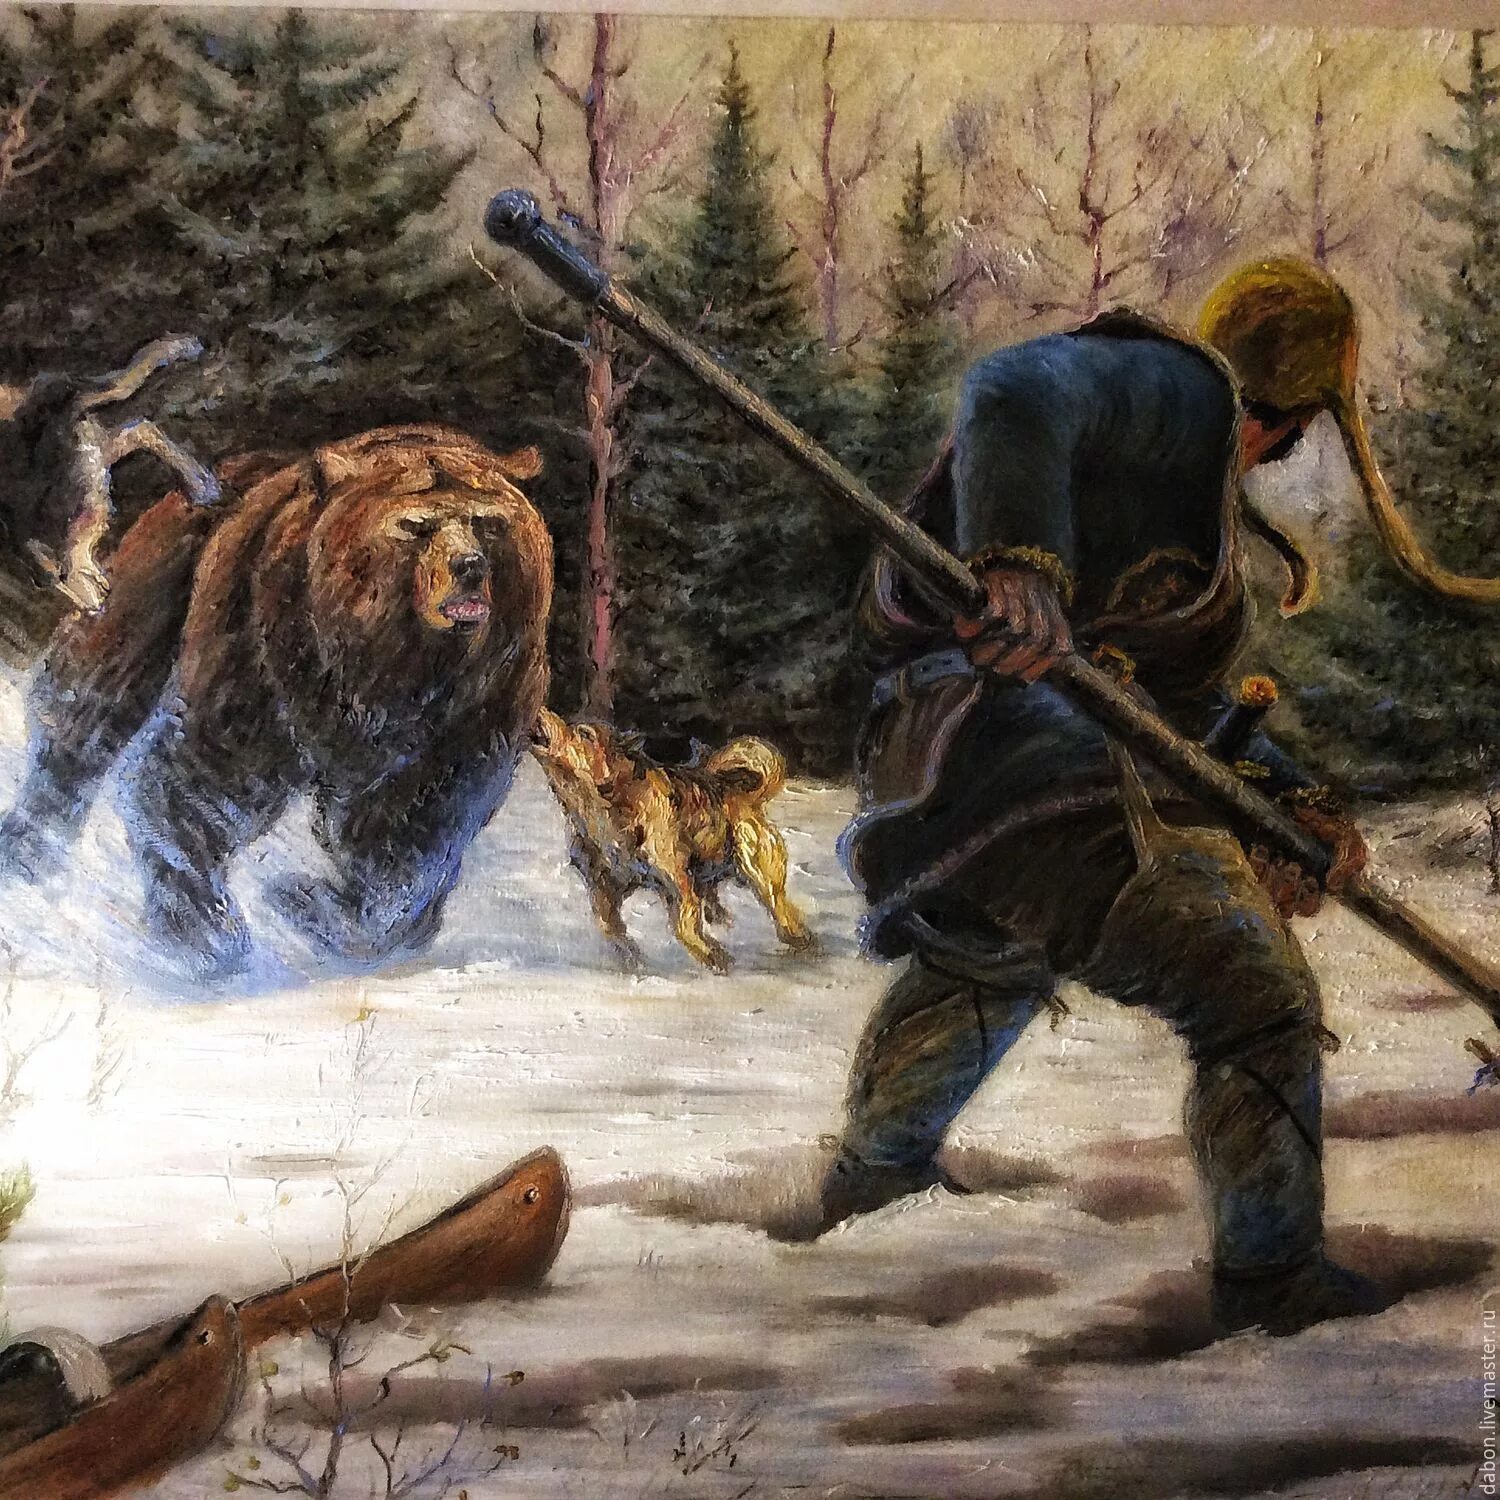 Охотник полетел. Охота в древней Руси. Охота на медведя с рогатиной на Руси. «Медвежья охота» Абратов.